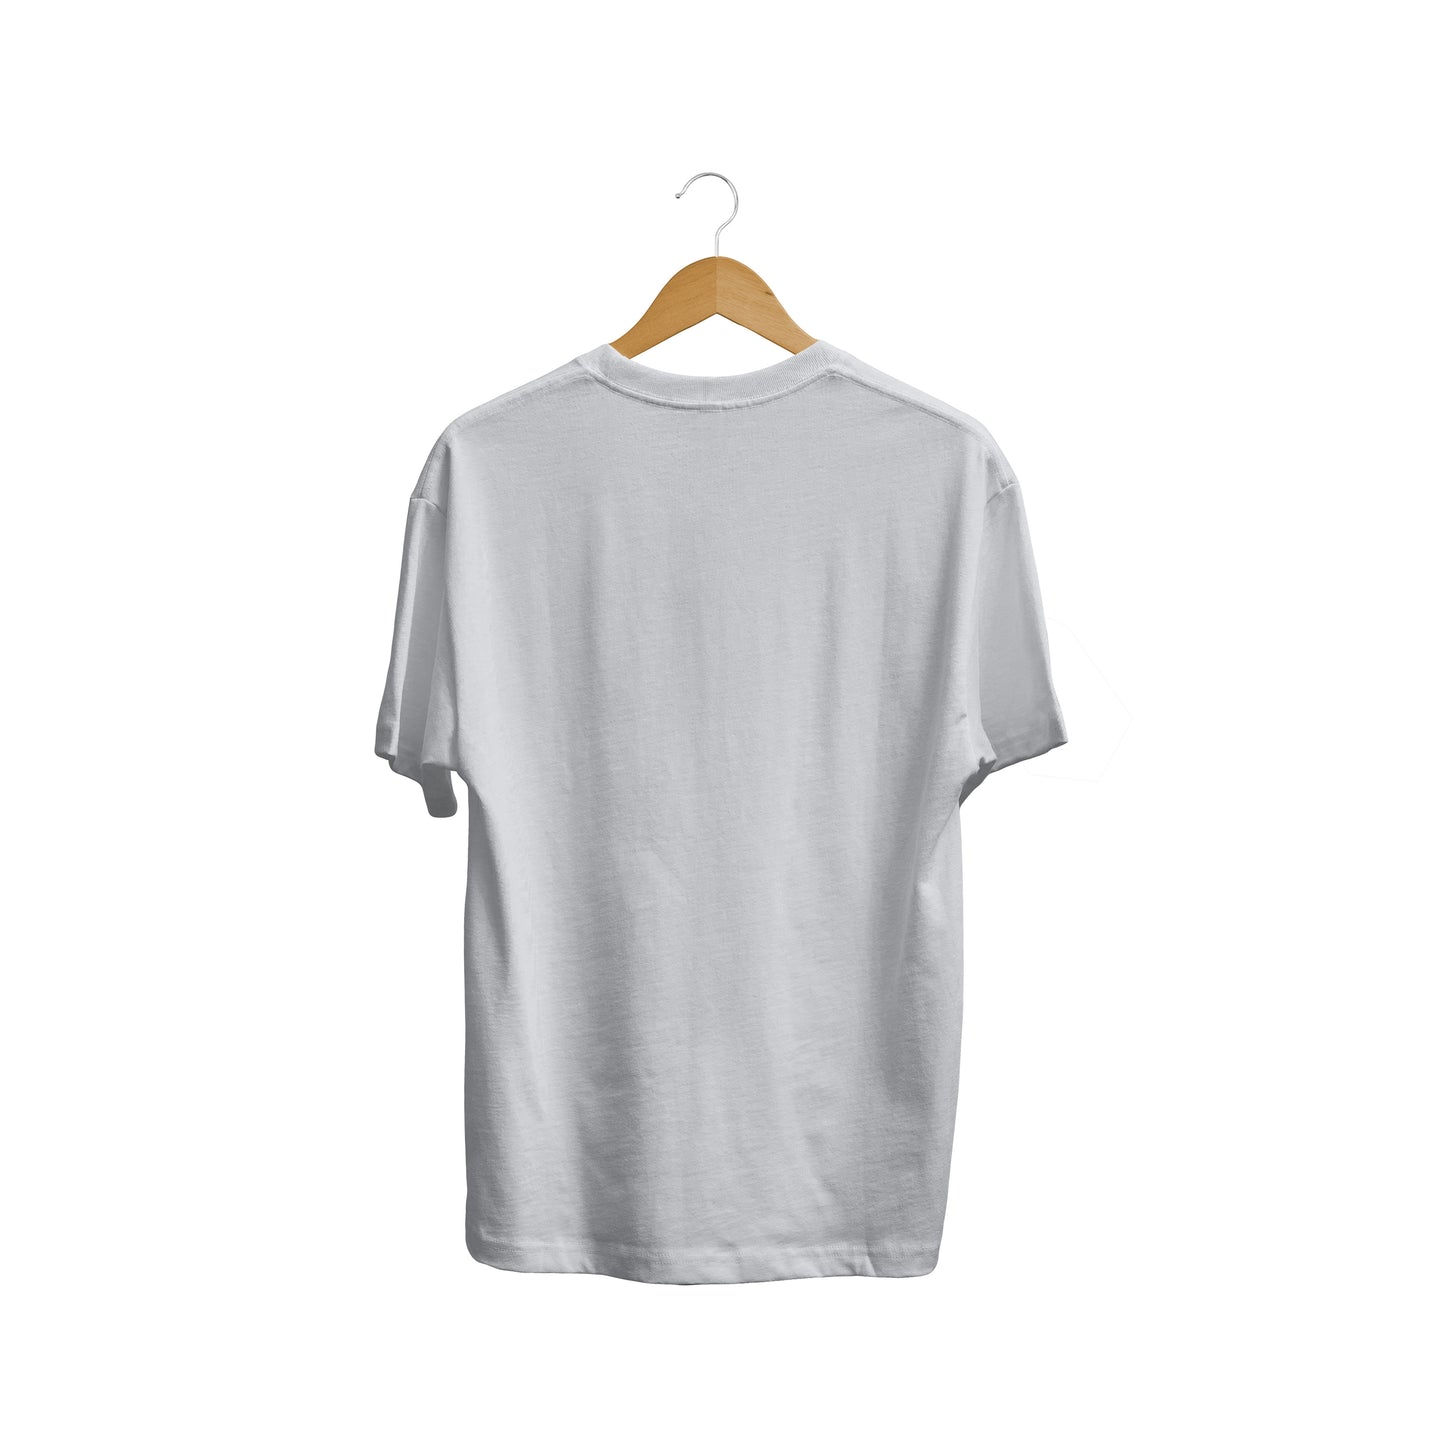 Silver Basic T-shirt - theqaafshop